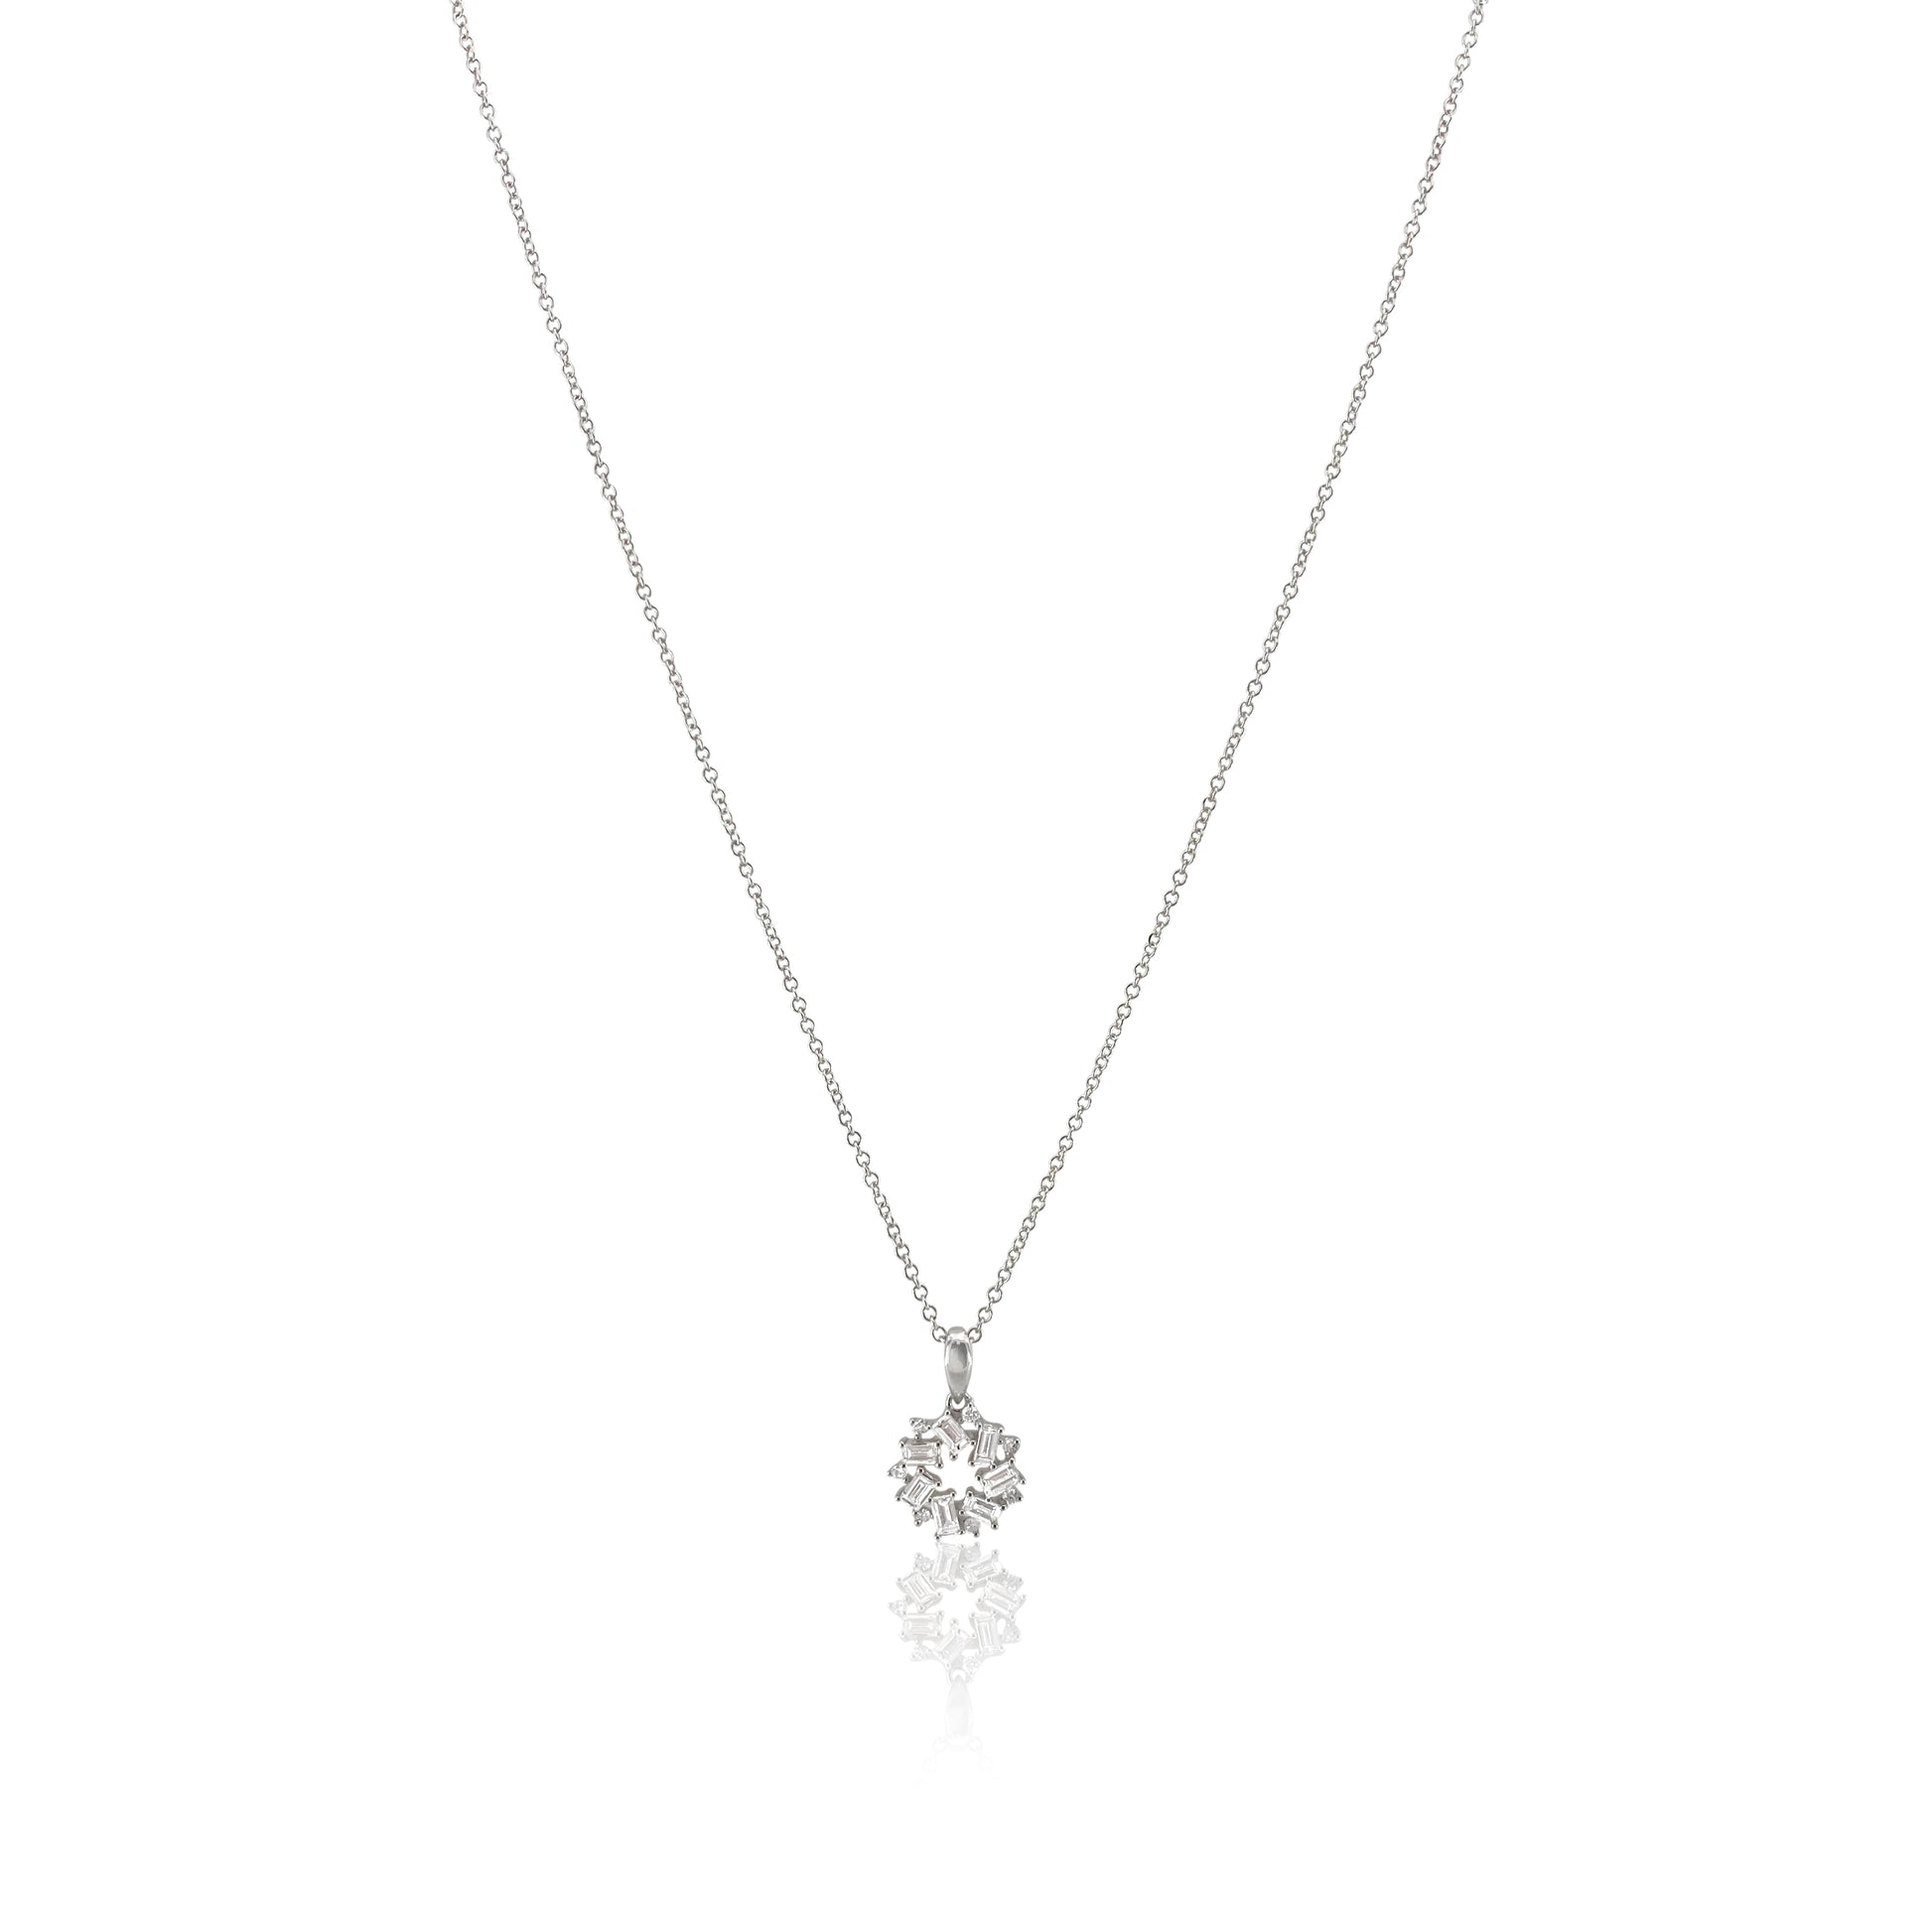 San Antonio Jewelry baguette diamond pendant with round diamond accents in 18k white gold. 